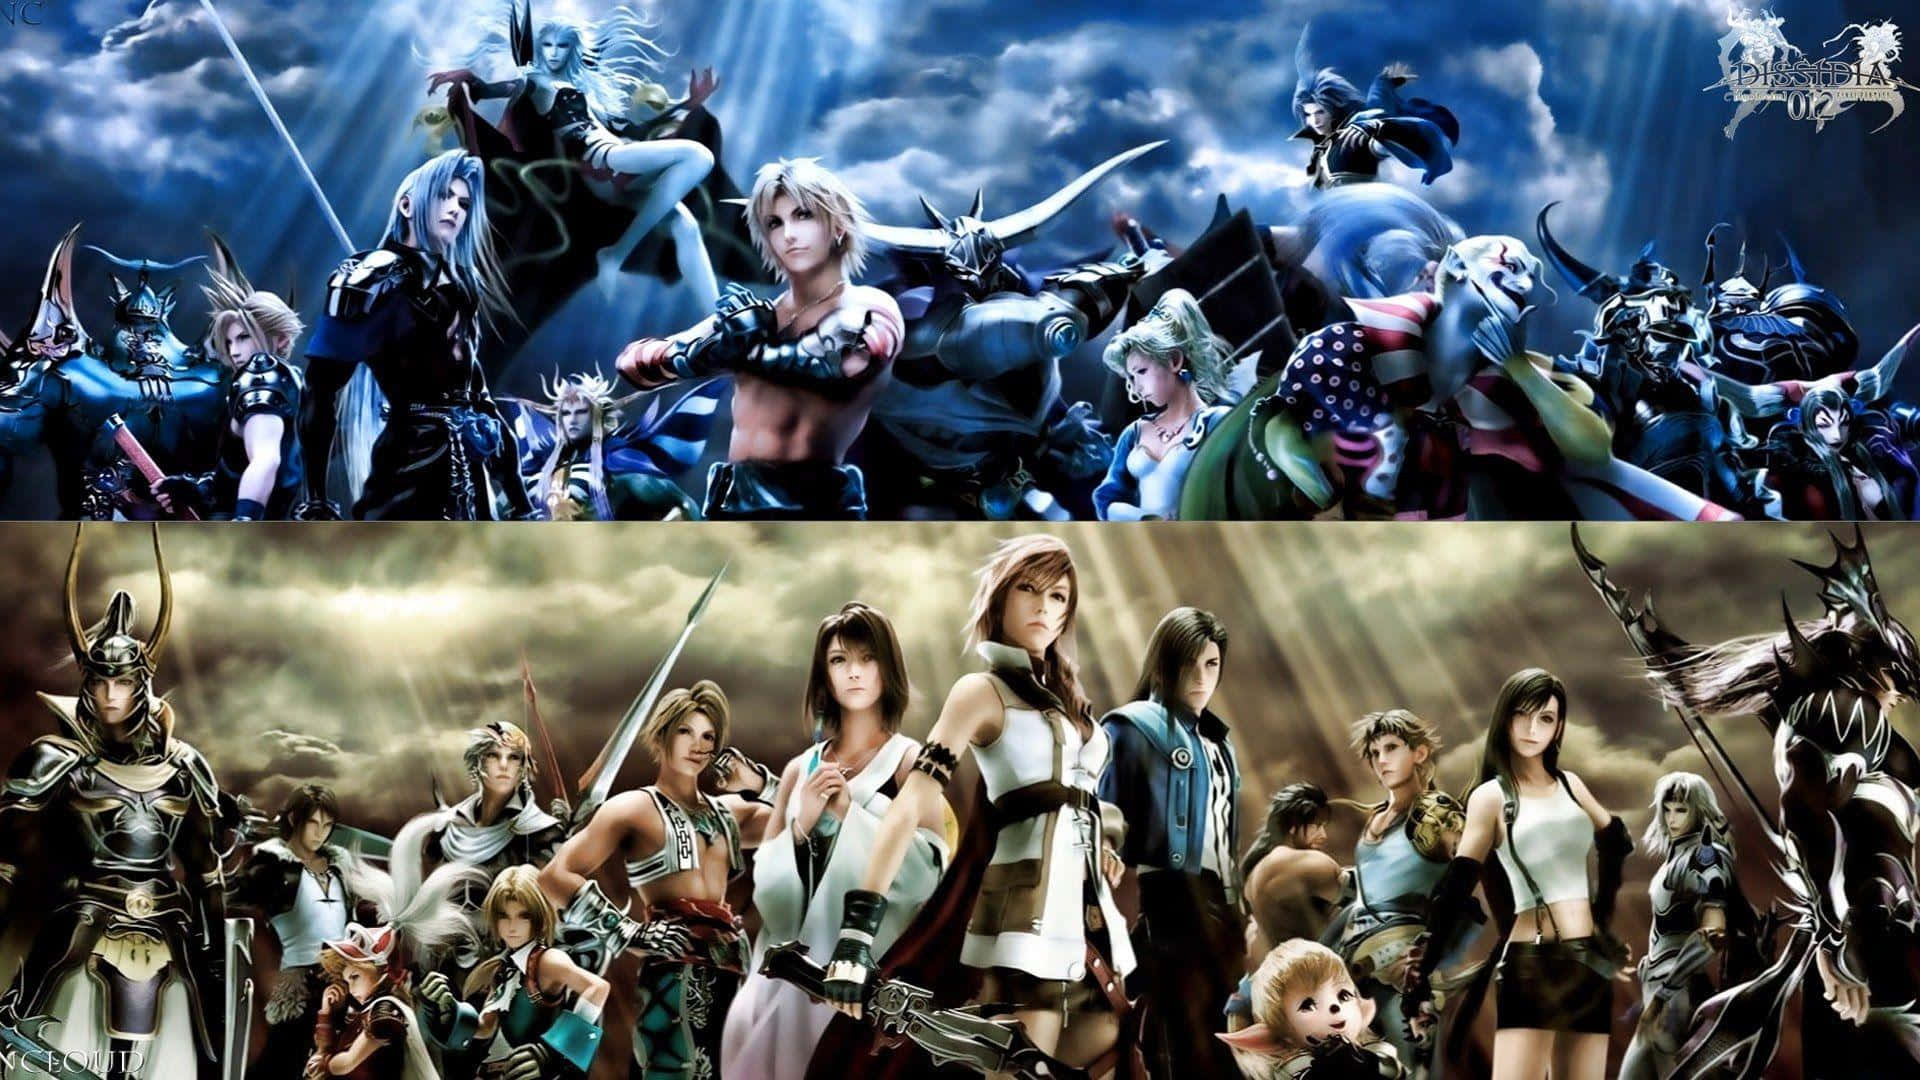 Epic Battle Action In Final Fantasy Dissidia Wallpaper